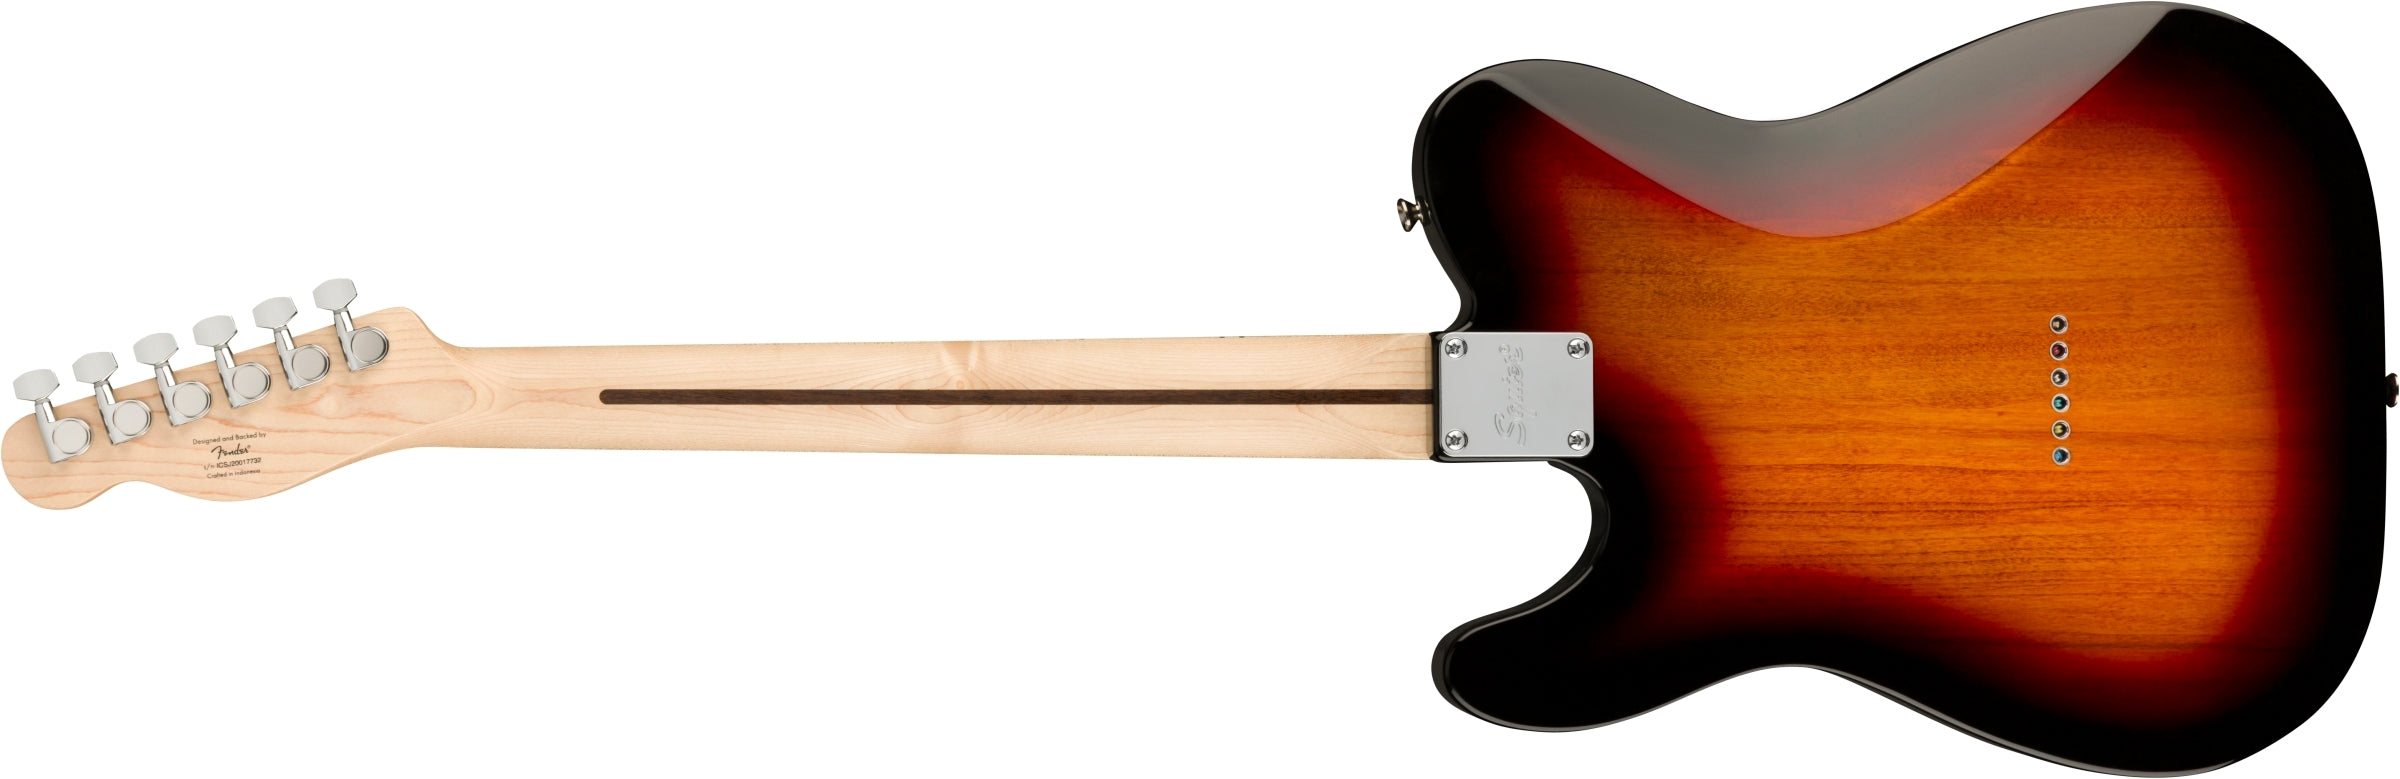 Squier Affinity Series Telecaster Electric Guitar - 3 Color Sunburst